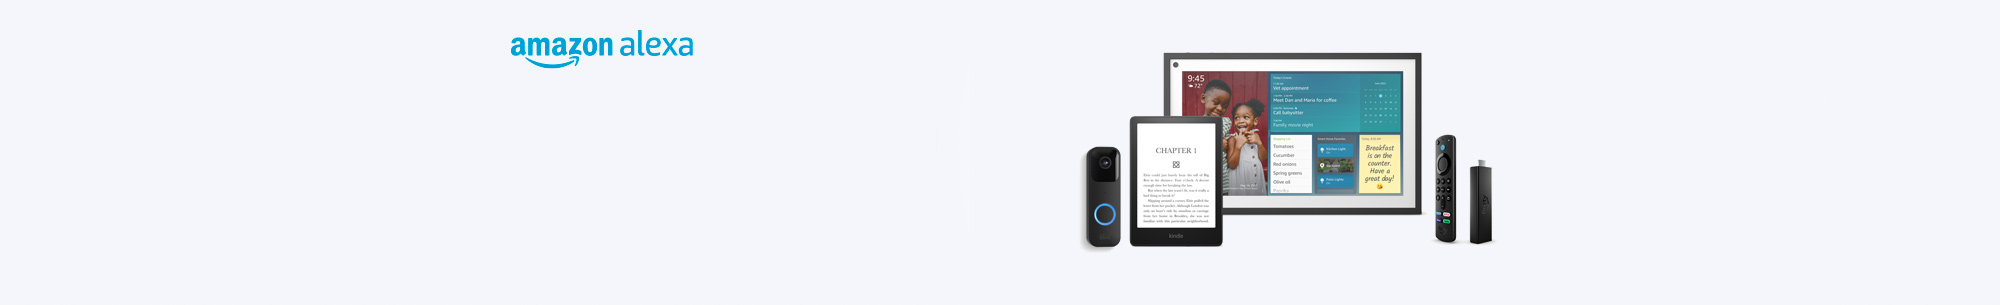 Amazon Alexa, Video doorbell, e-reader, smart display and streaming media player